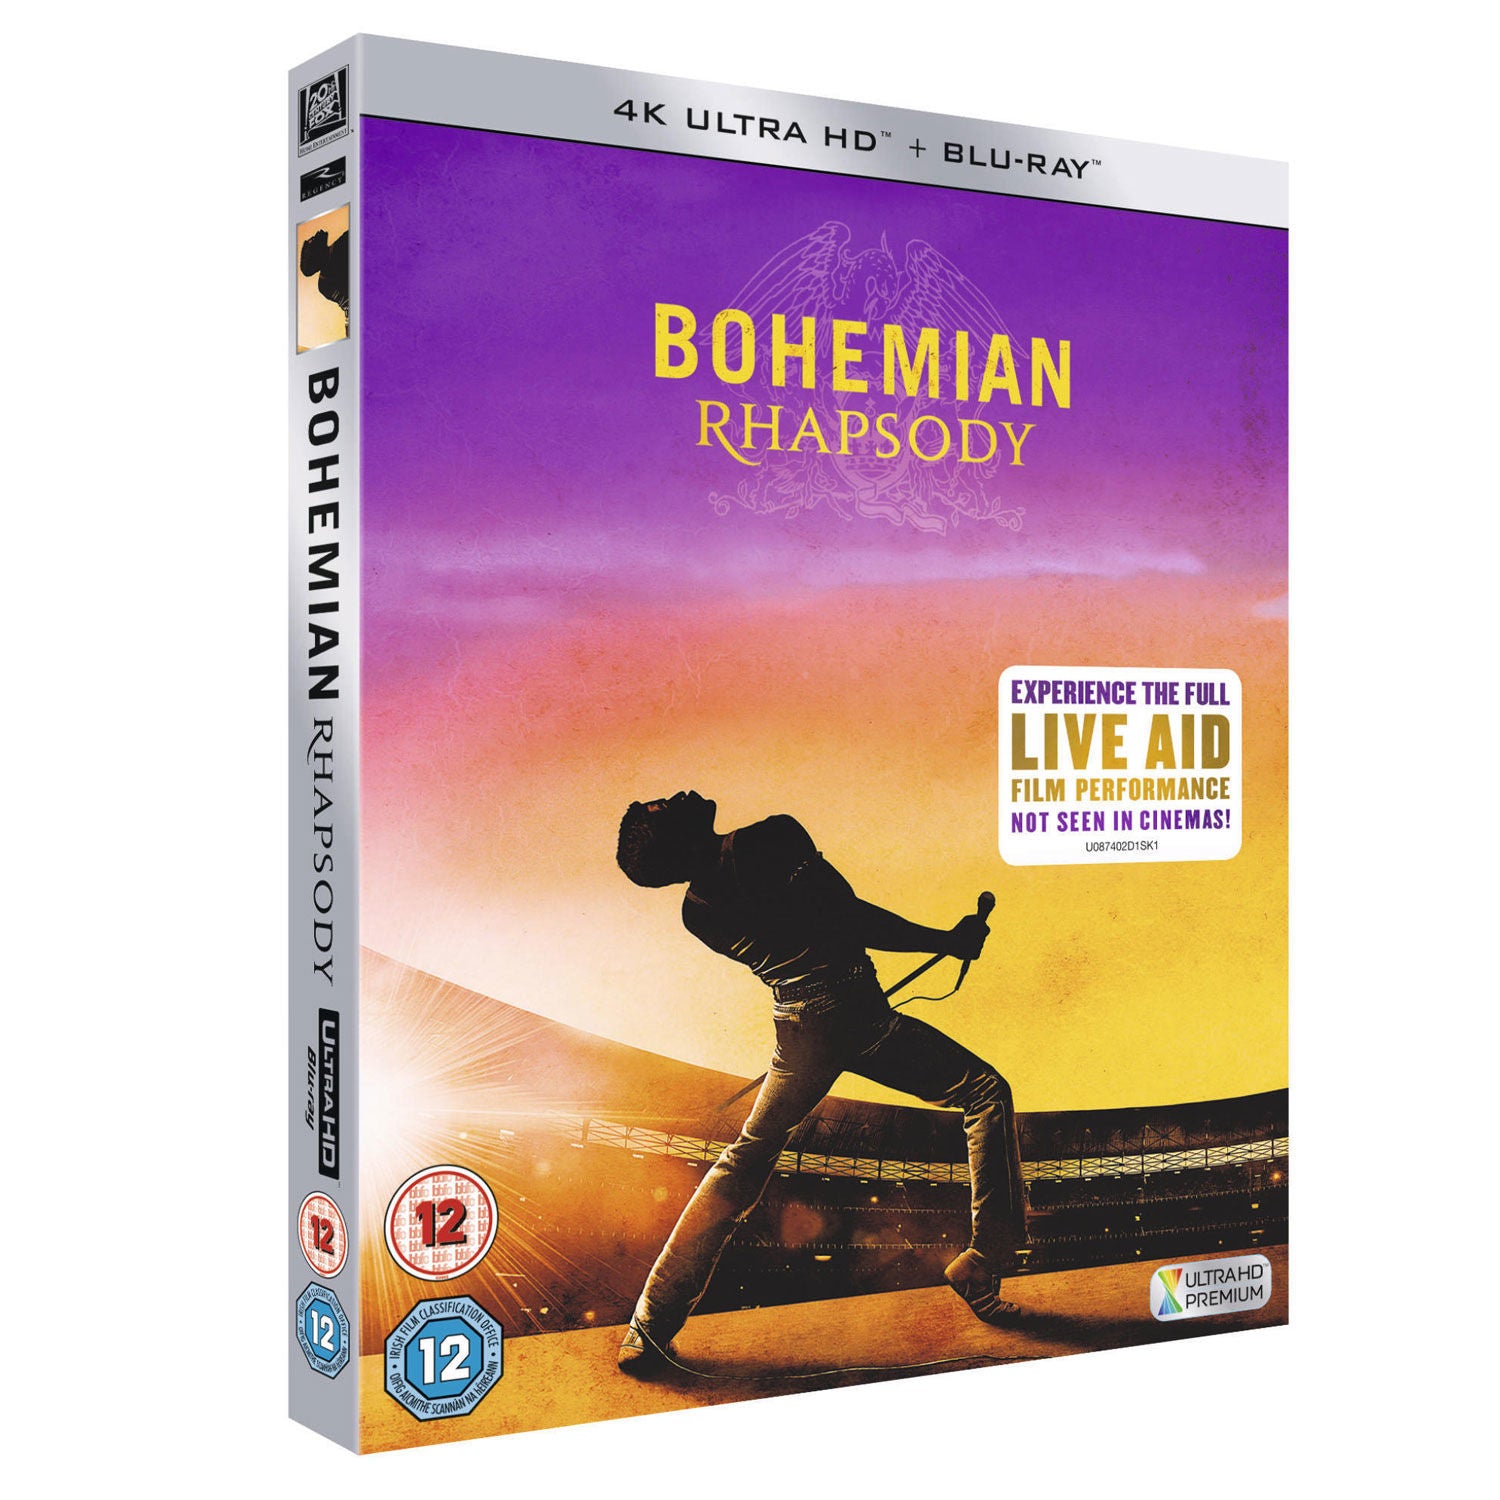 Bohemian Rhapsody (Blu-ray + DVD + Digital 2018) New/Sealed